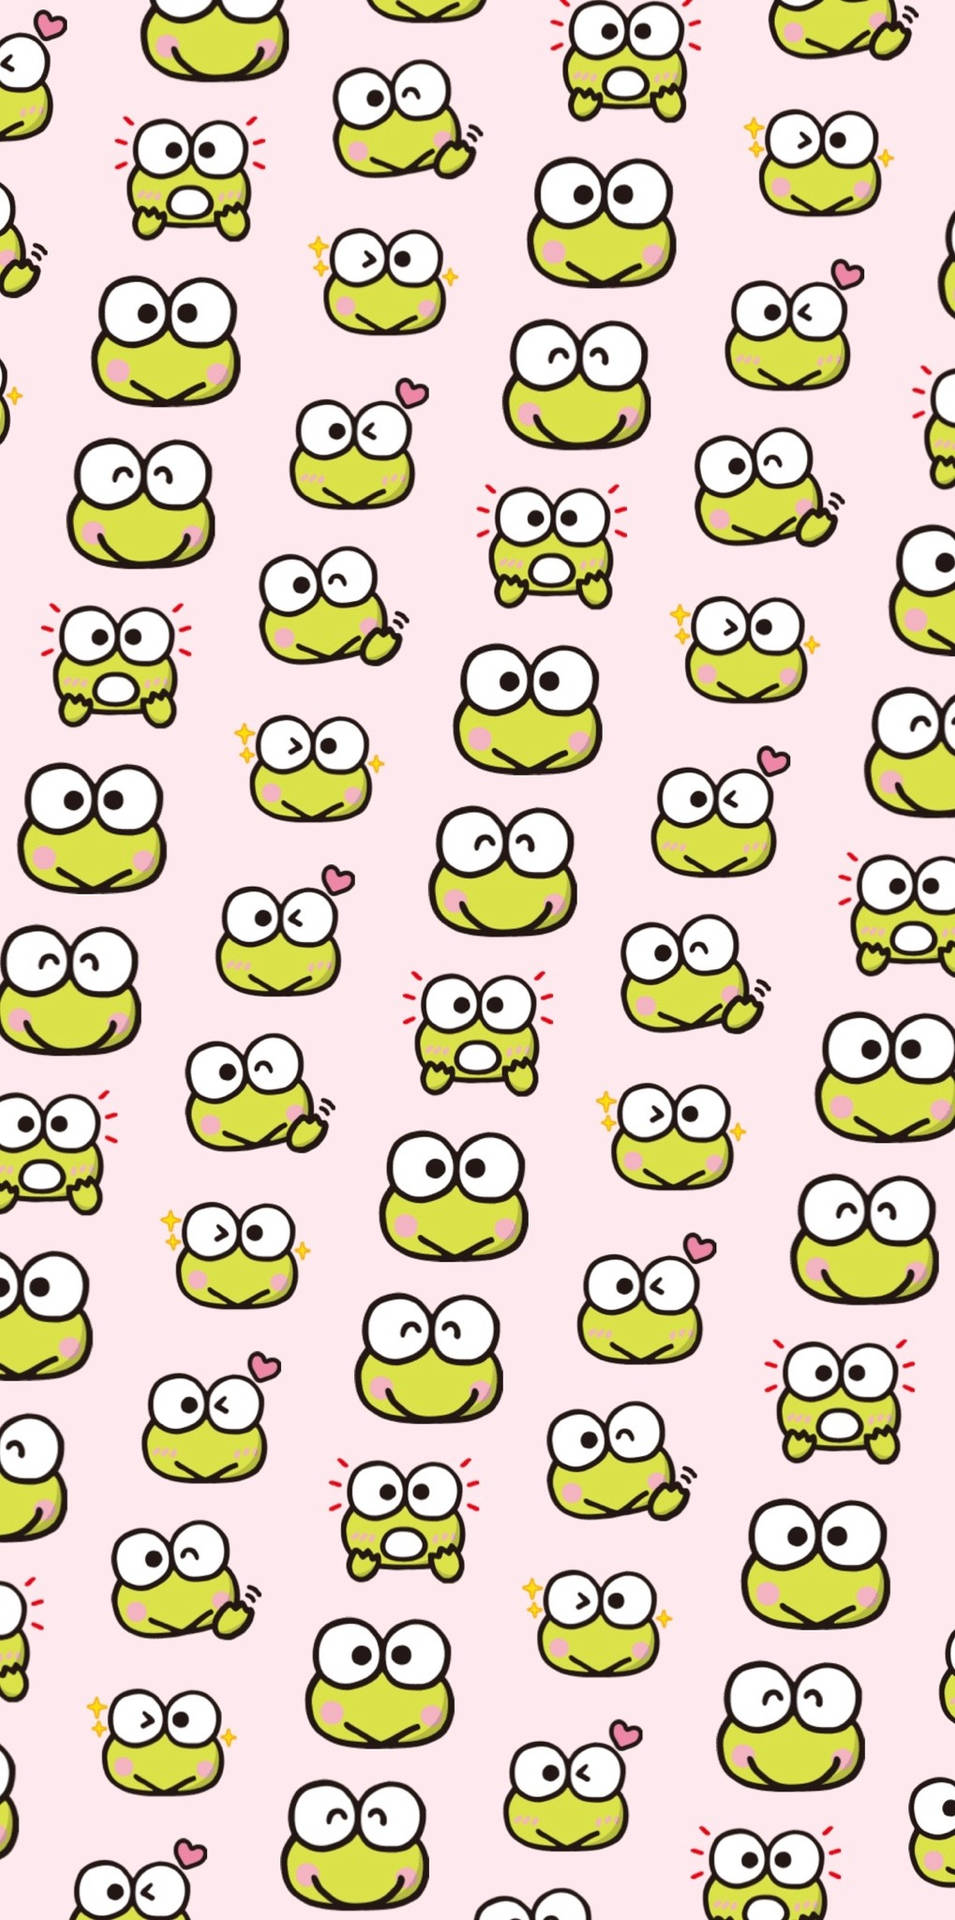 Keroppi's Emotions Pattern Wallpaper